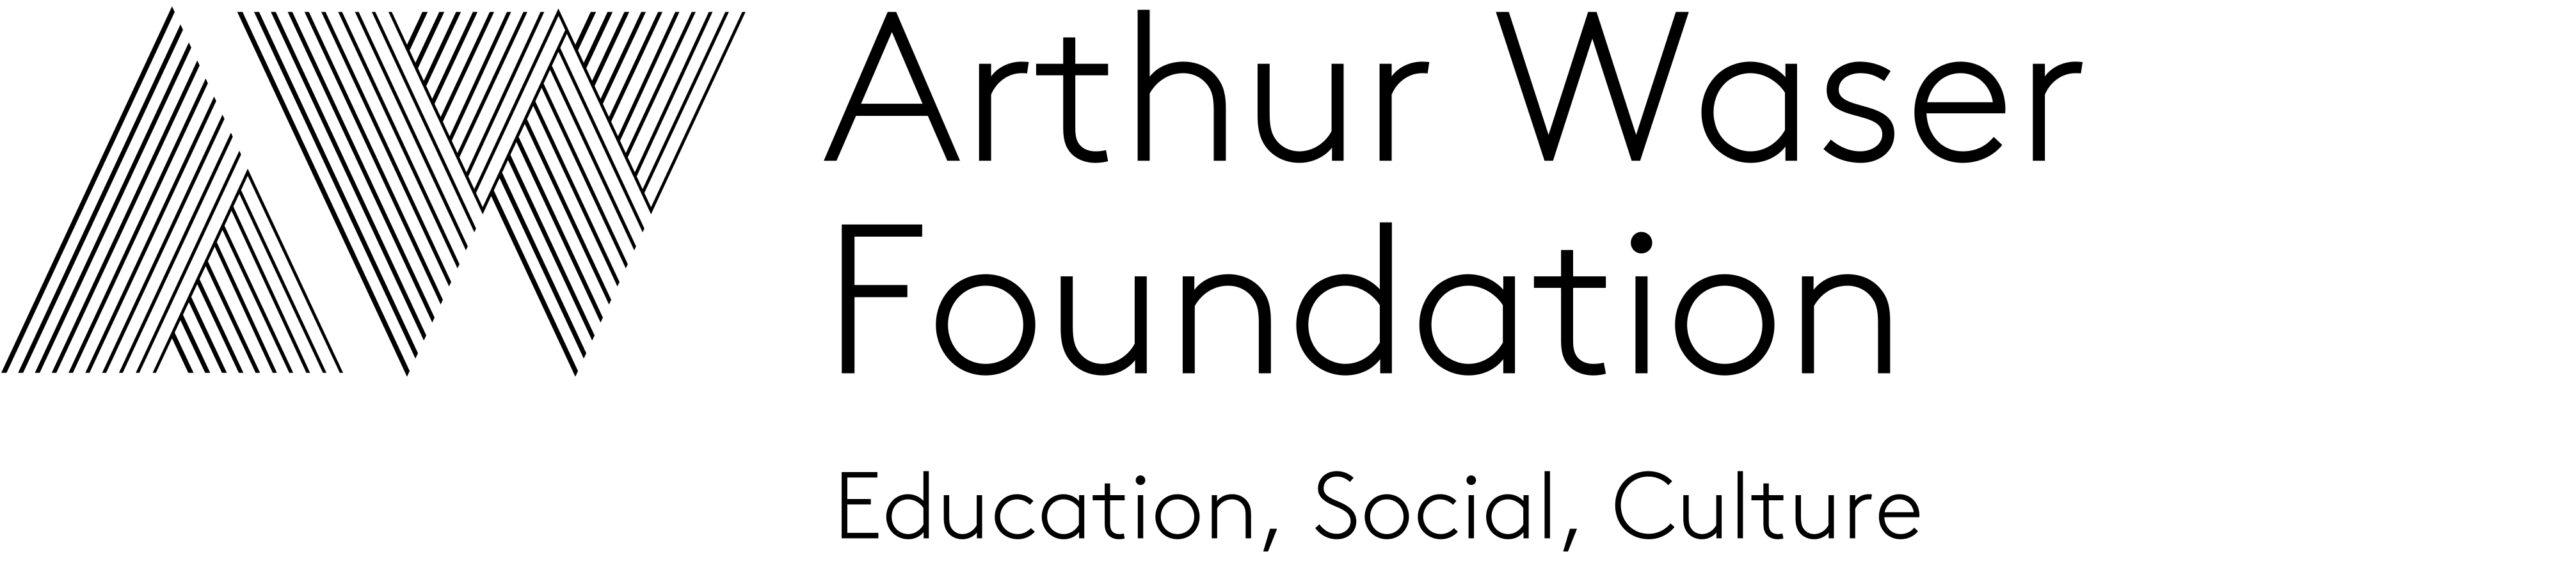 Arthur Waser Foundation